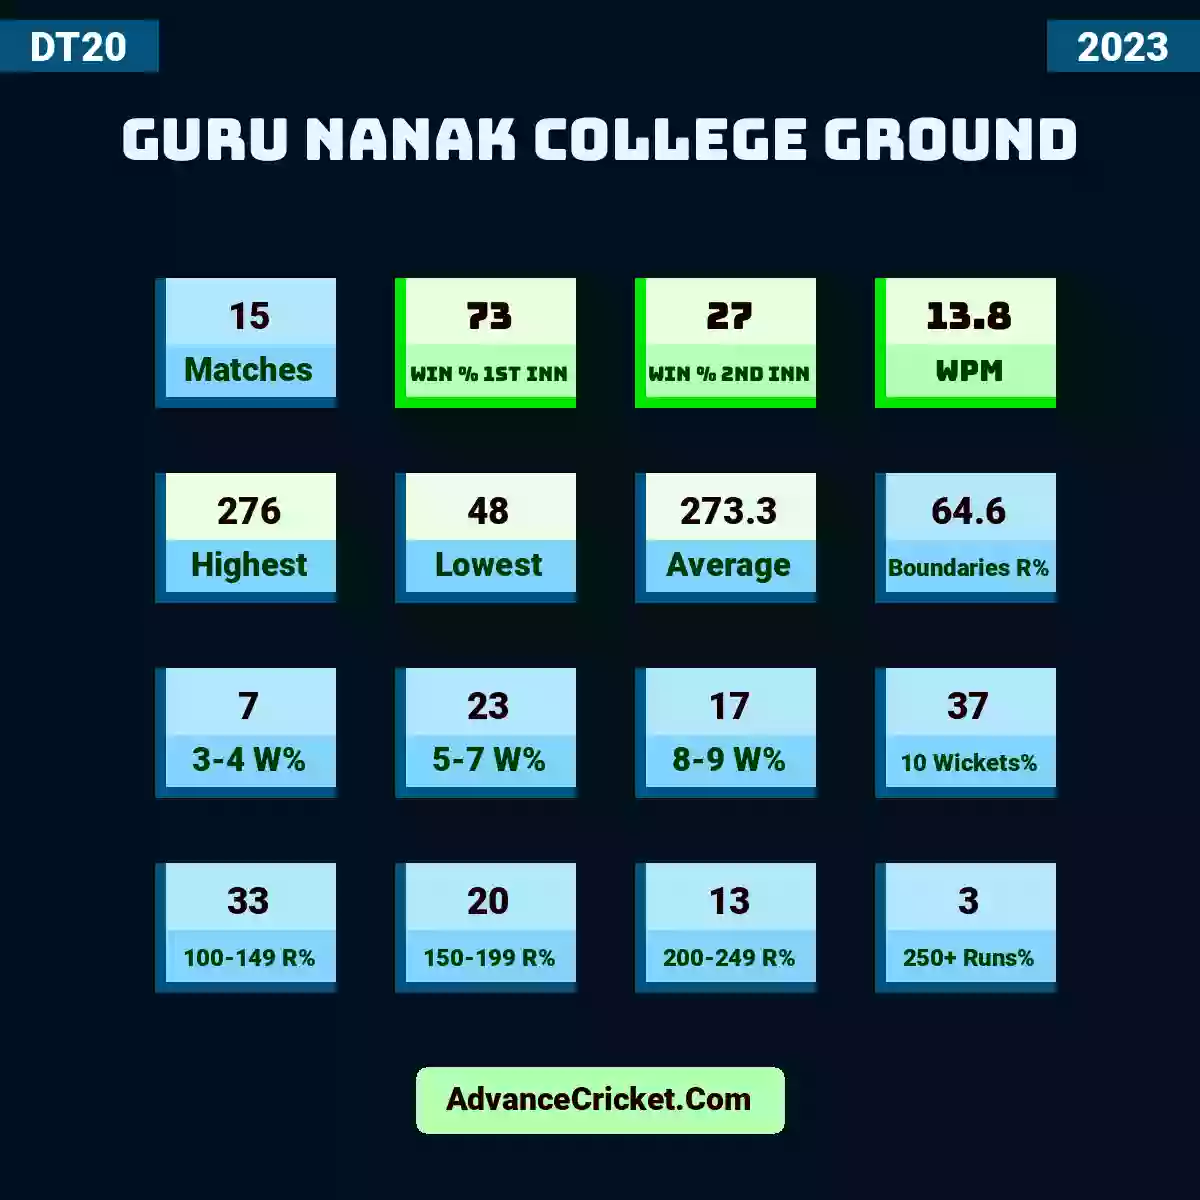 Image showing Guru Nanak College Ground with Matches: 15, Win % 1st Inn: 73, Win % 2nd Inn: 27, WPM: 13.8, Highest: 276, Lowest: 48, Average: 273.3, Boundaries R%: 64.6, 3-4 W%: 7, 5-7 W%: 23, 8-9 W%: 17, 10 Wickets%: 37, 100-149 R%: 33, 150-199 R%: 20, 200-249 R%: 13, 250+ Runs%: 3.